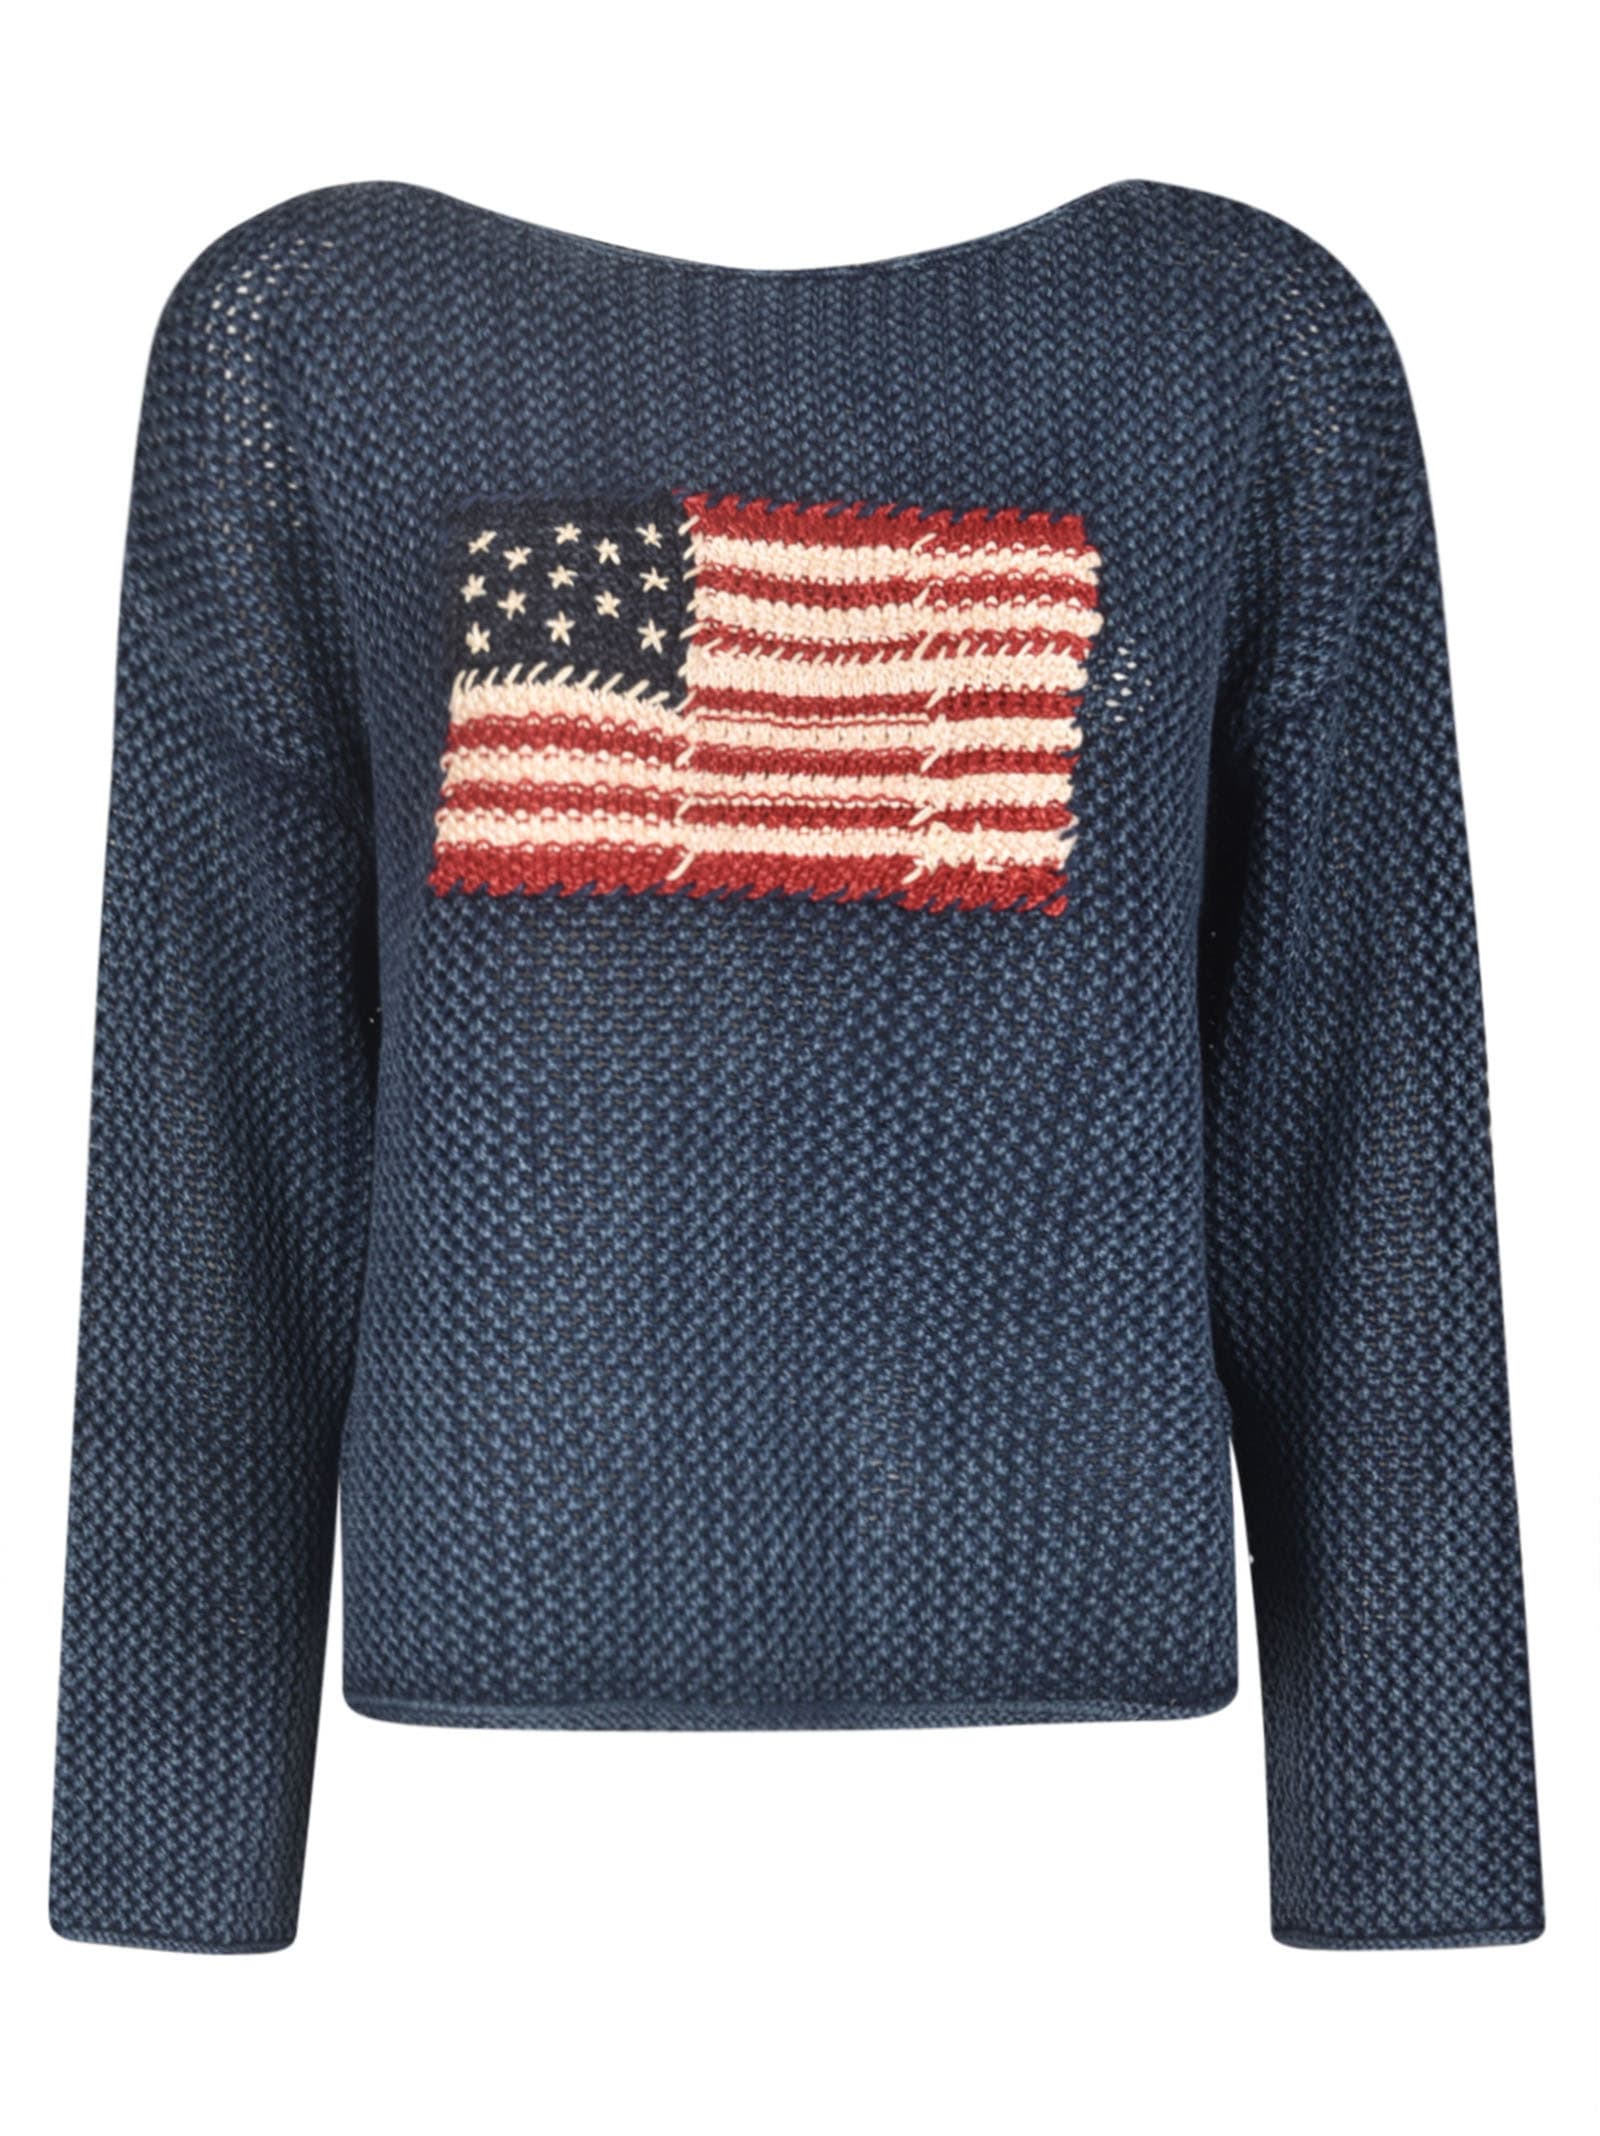 American Flag Crocket Sweatshirt